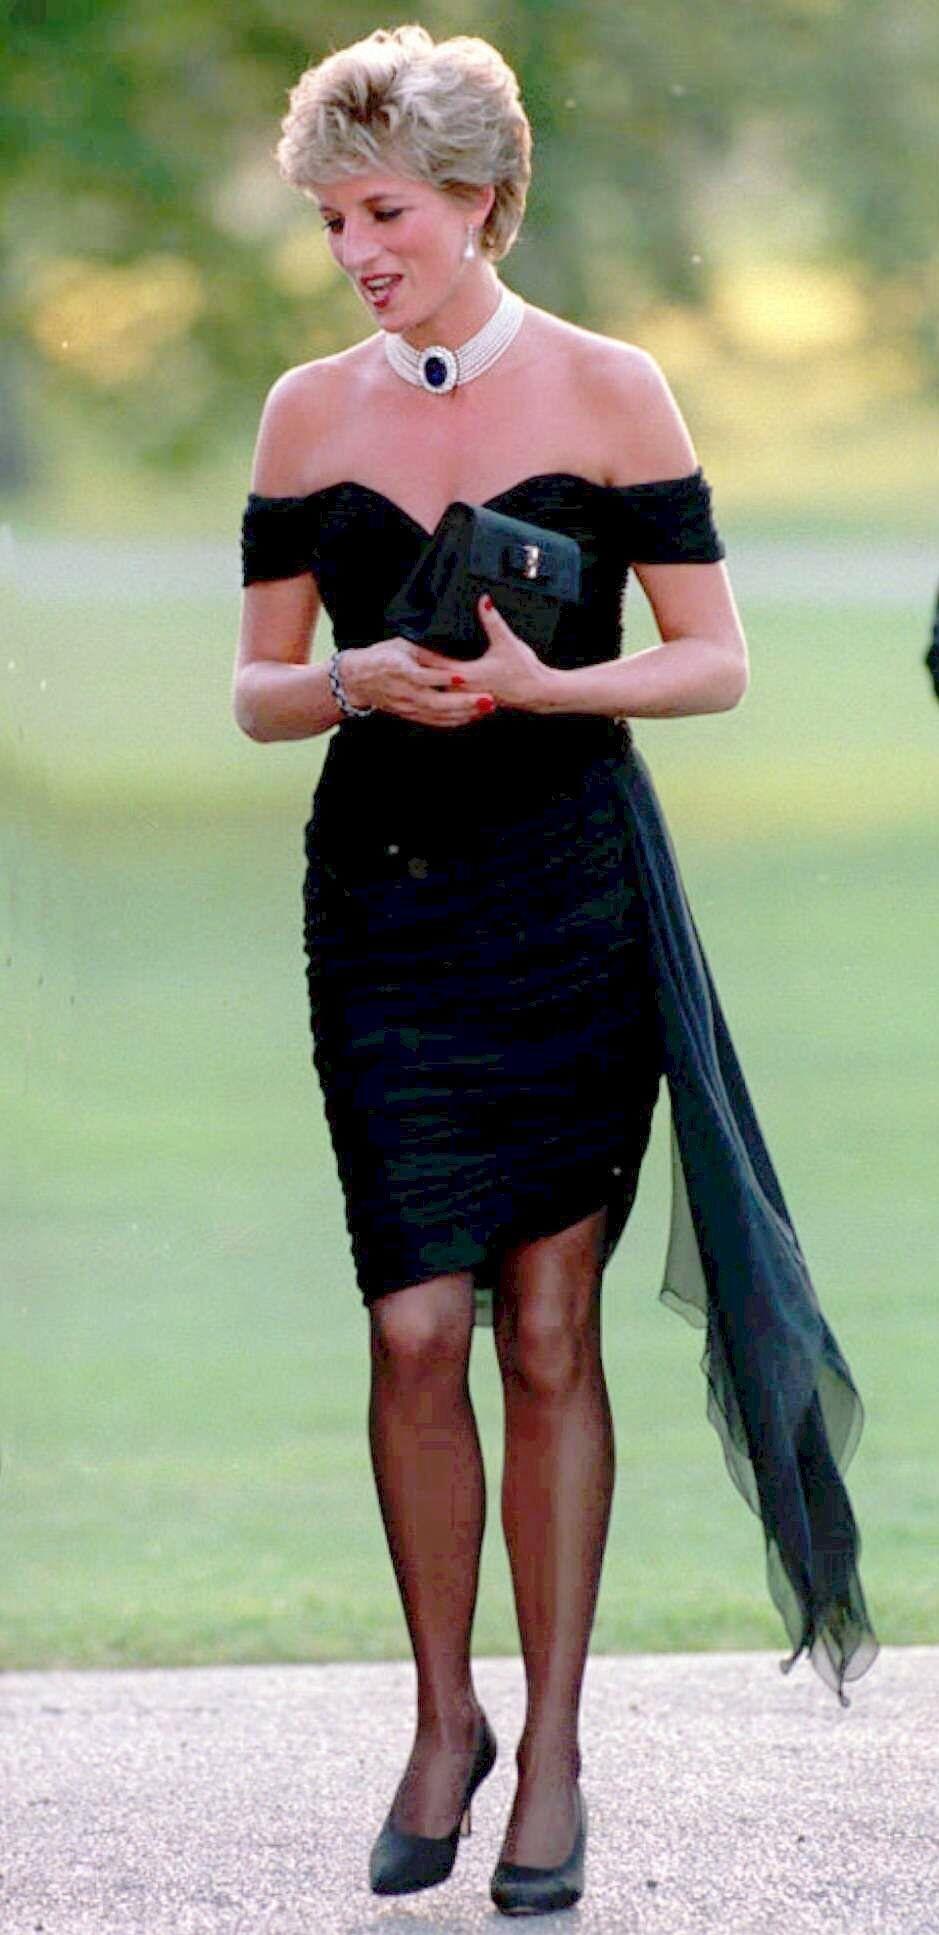 OFF SHOULDER: Dianas kjole, som kom fra designeren Christina Stamboulian, ville unektelig vært trendy også i dag med de bare skuldrene. Foto: AP